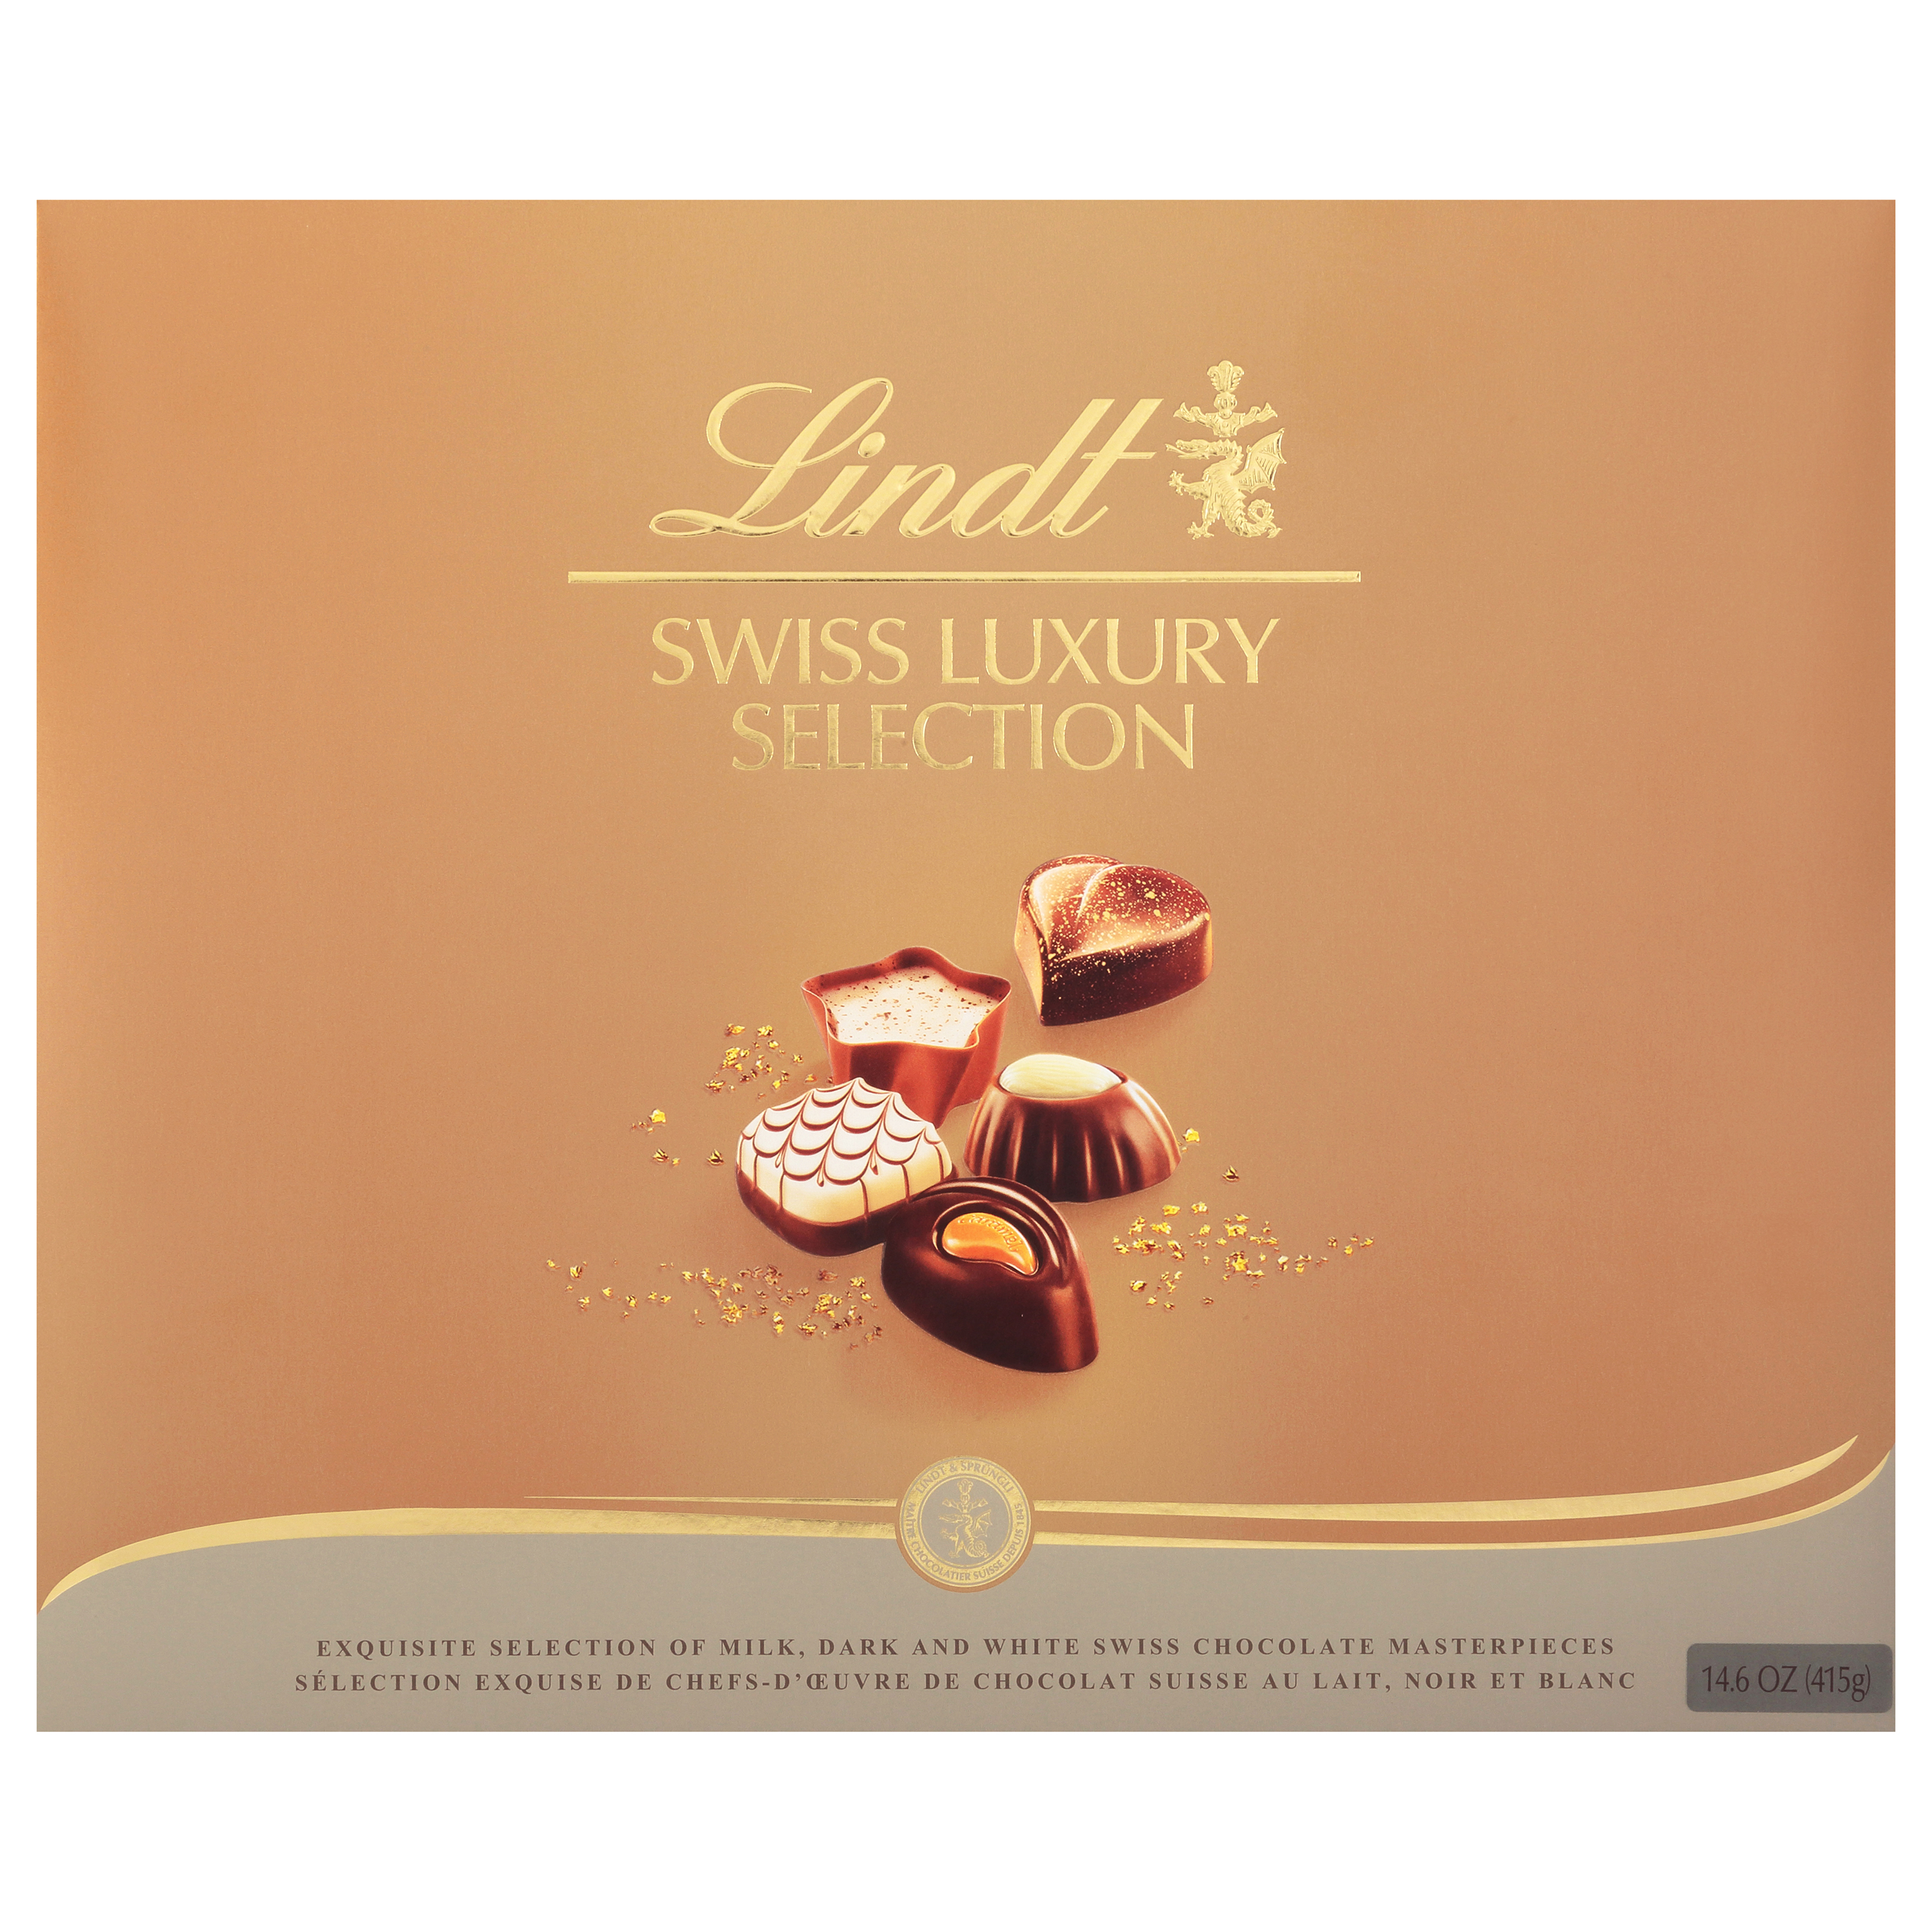 Lindt Swiss Luxury Selection Chocolate, 14.6 oz - image 3 of 4